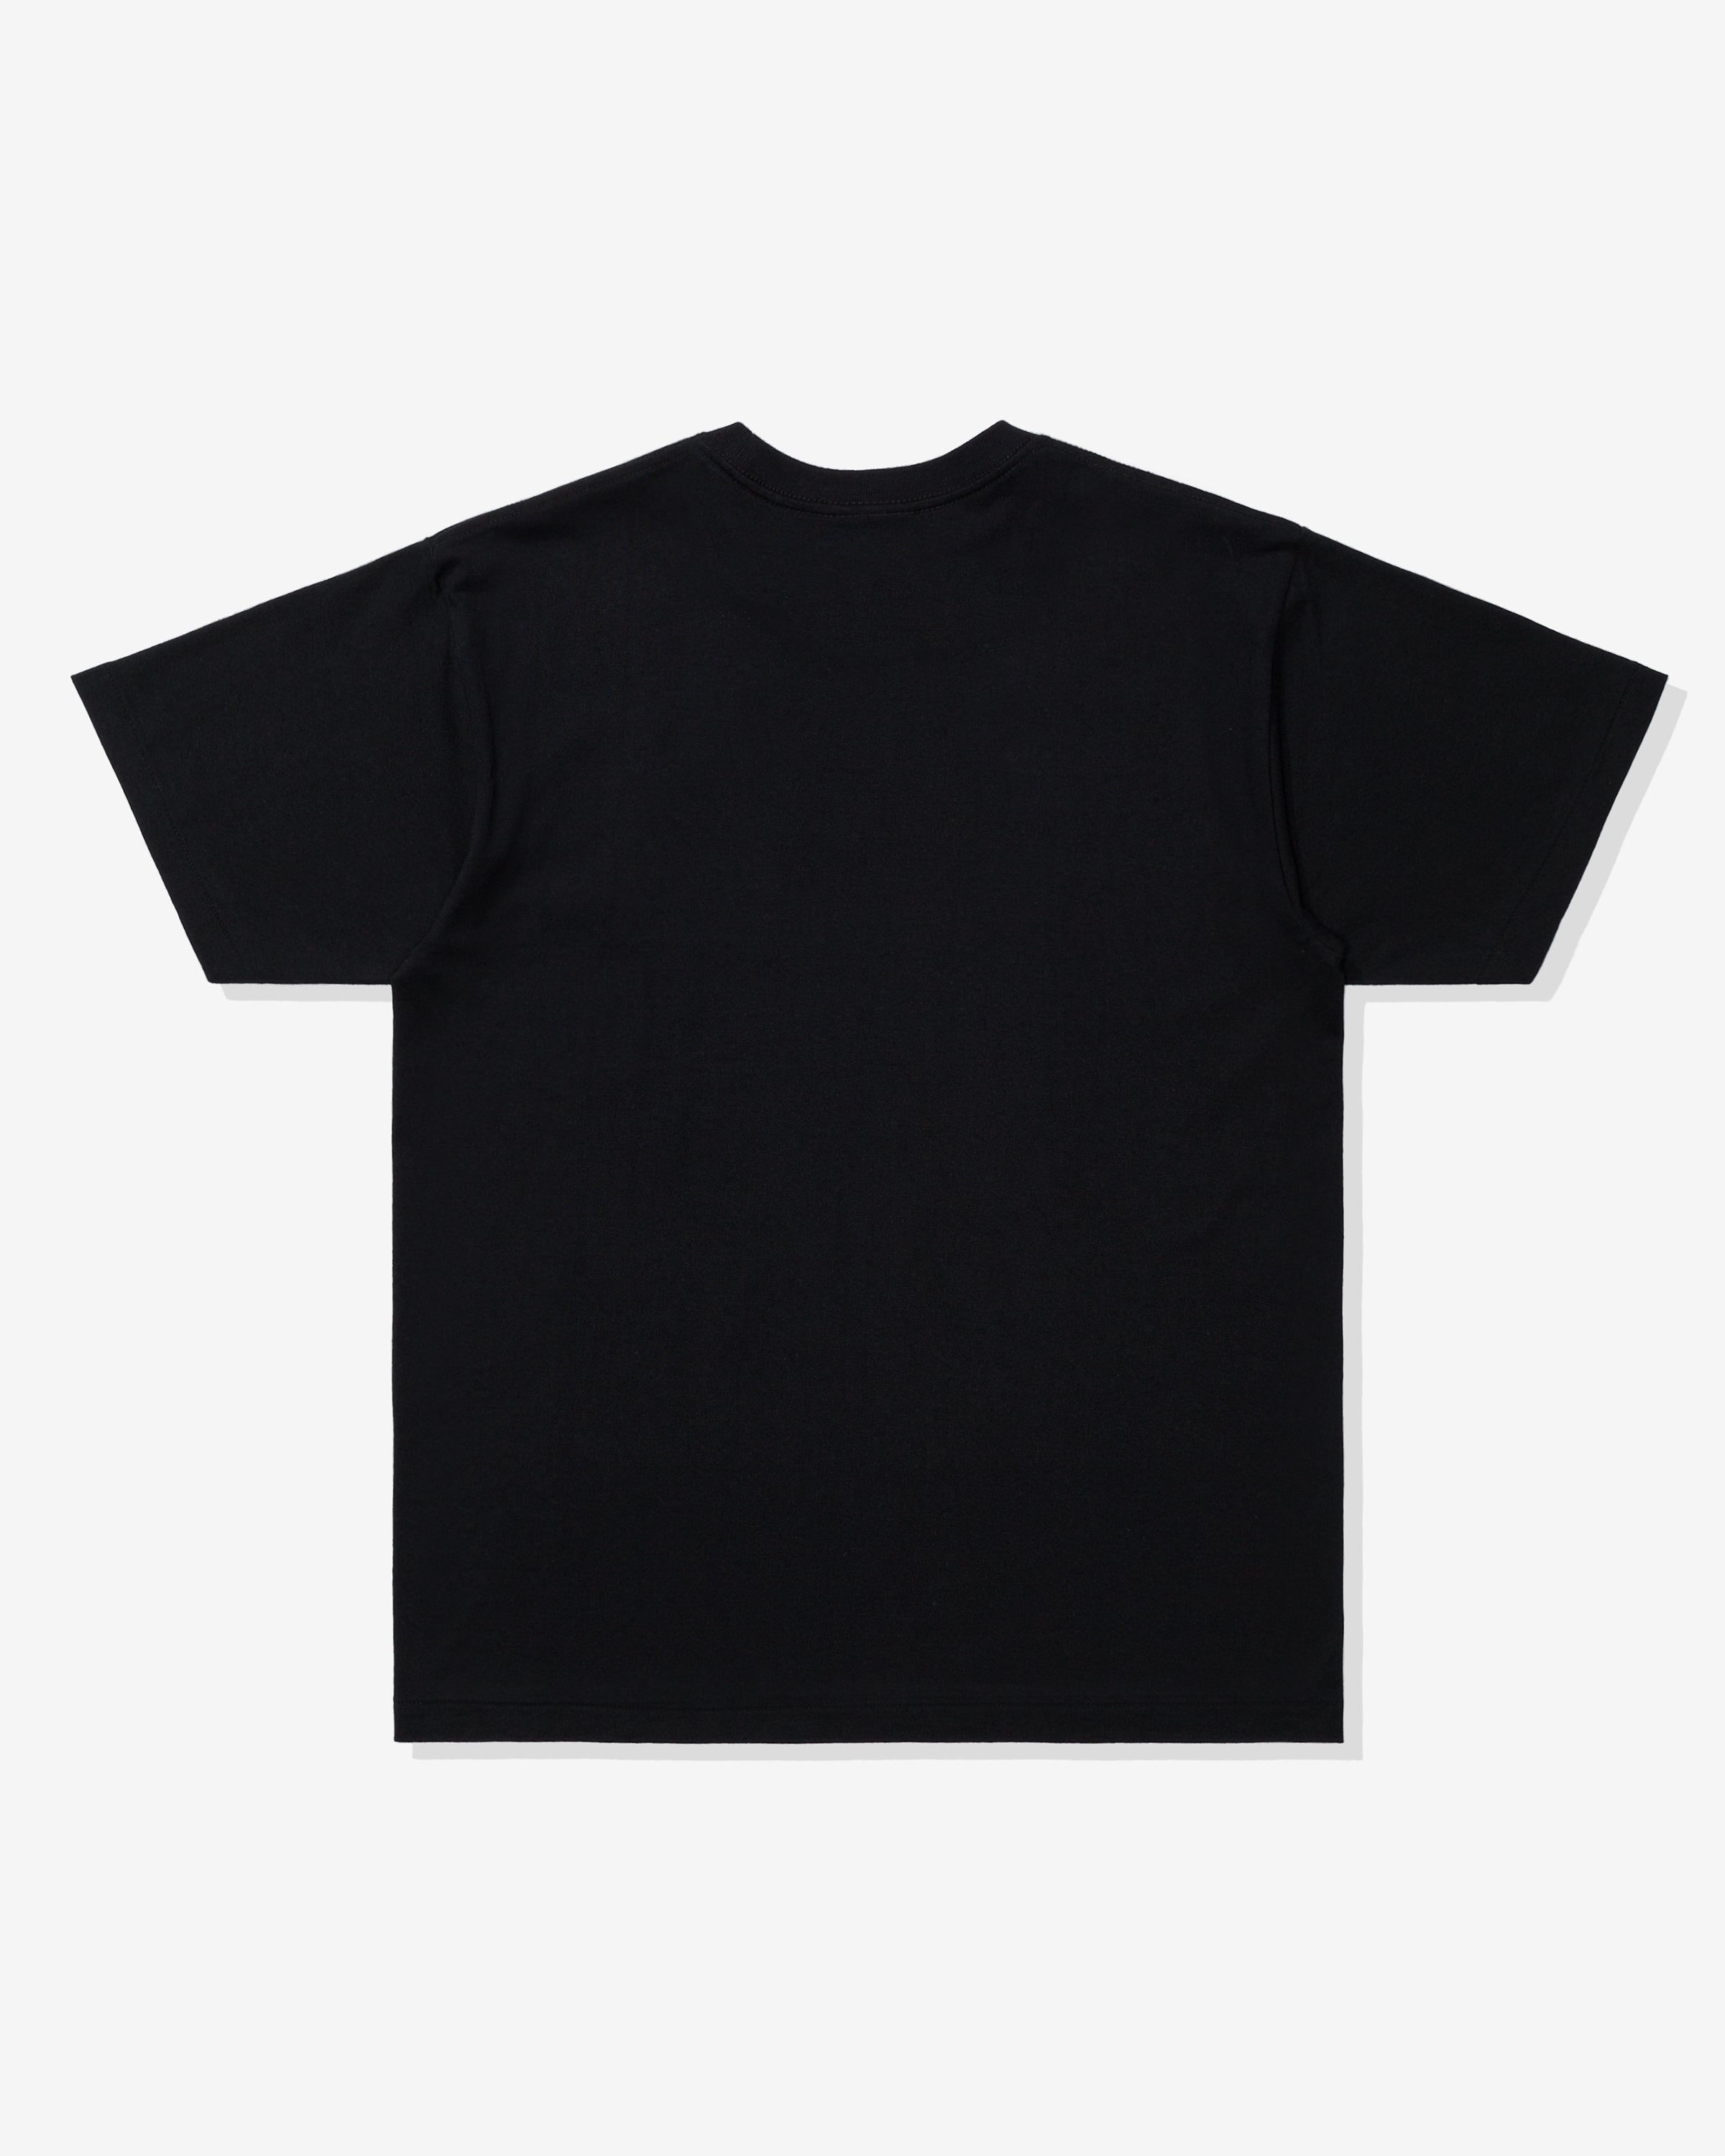 Undefeated Men's T-Shirt - Black - S